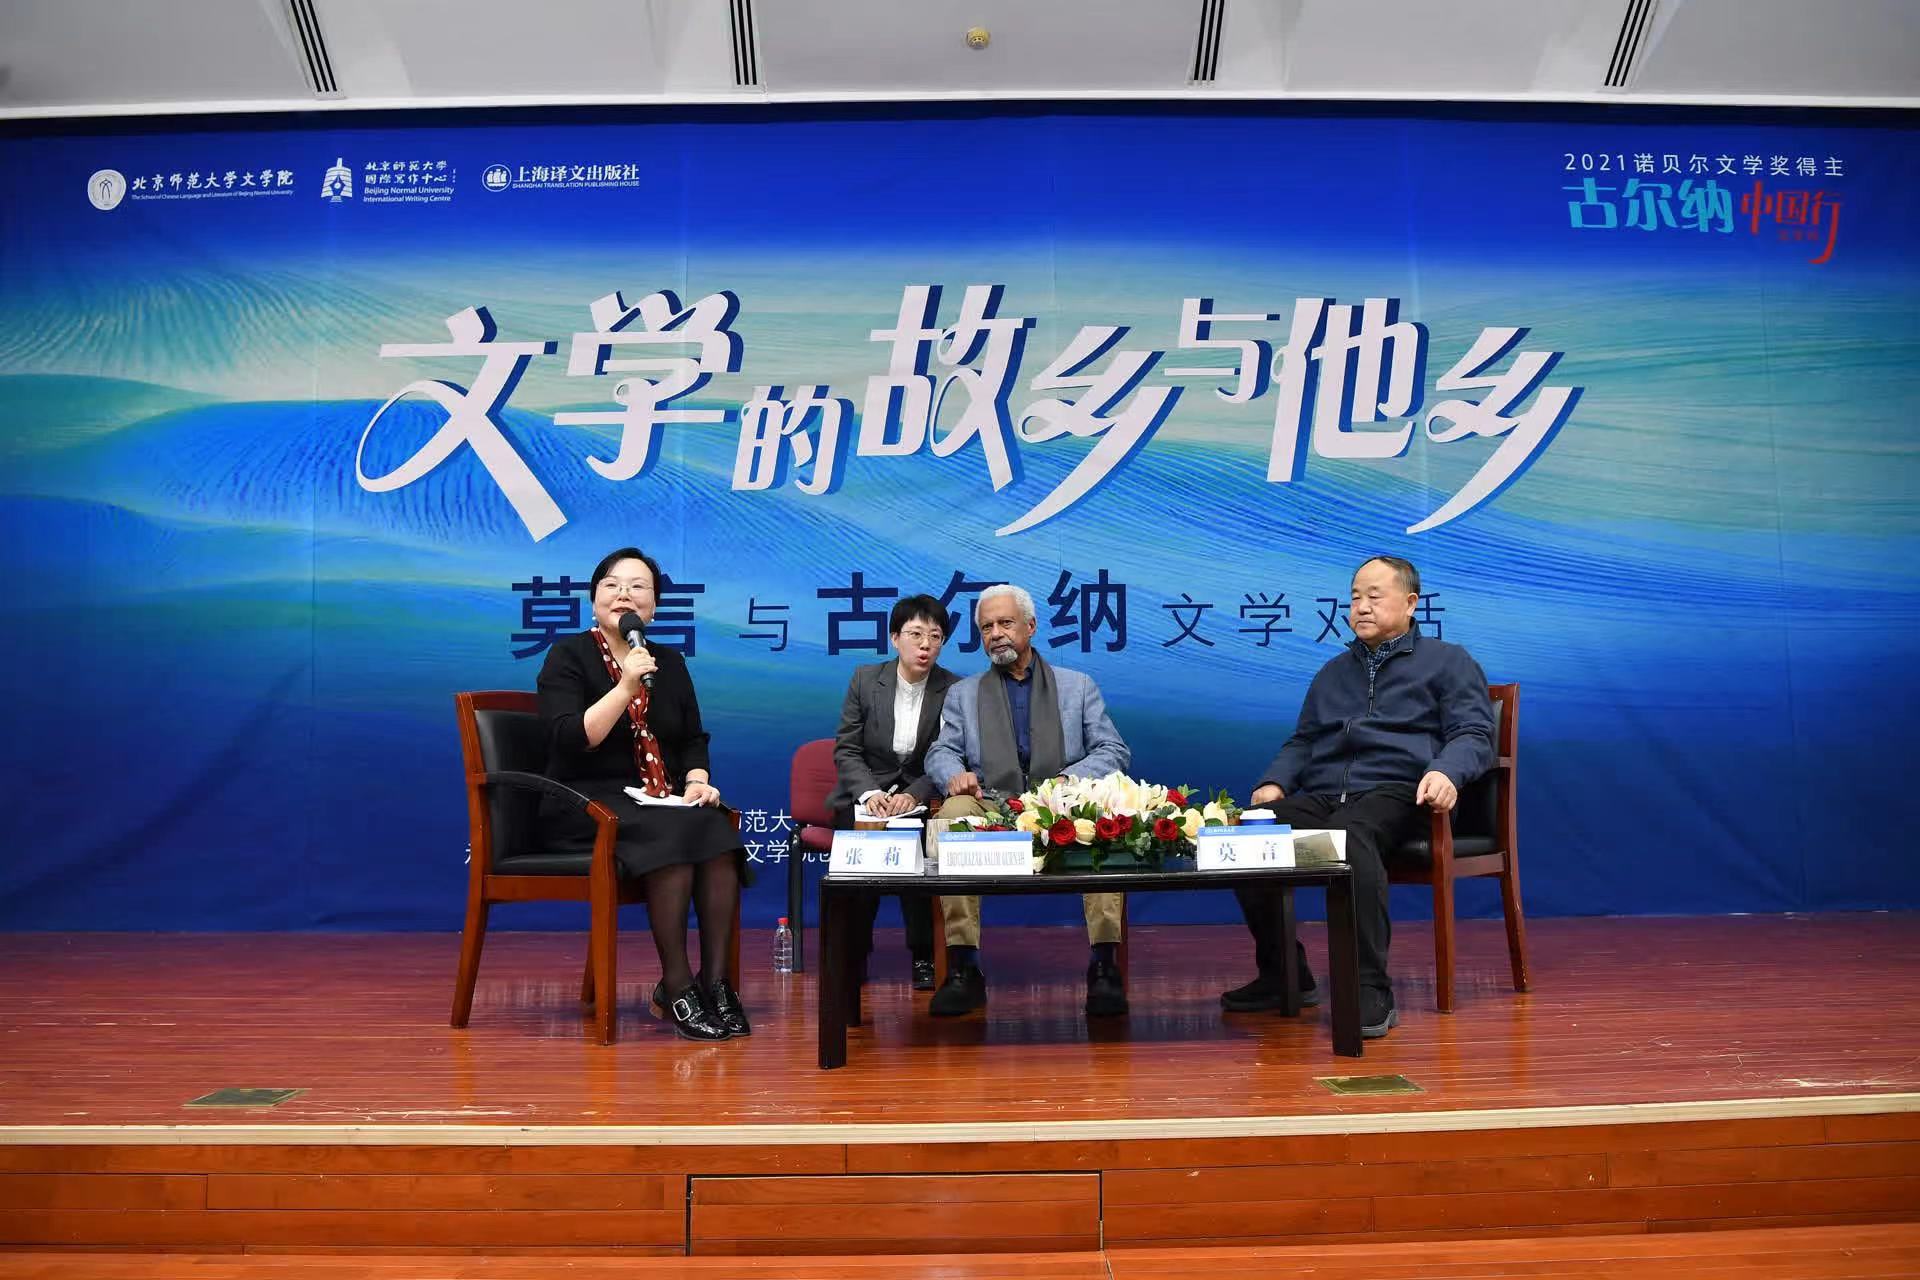 Nobel Prize winner Abdulrazak Gurnah shares memories about ‘home’ with Beijing readers